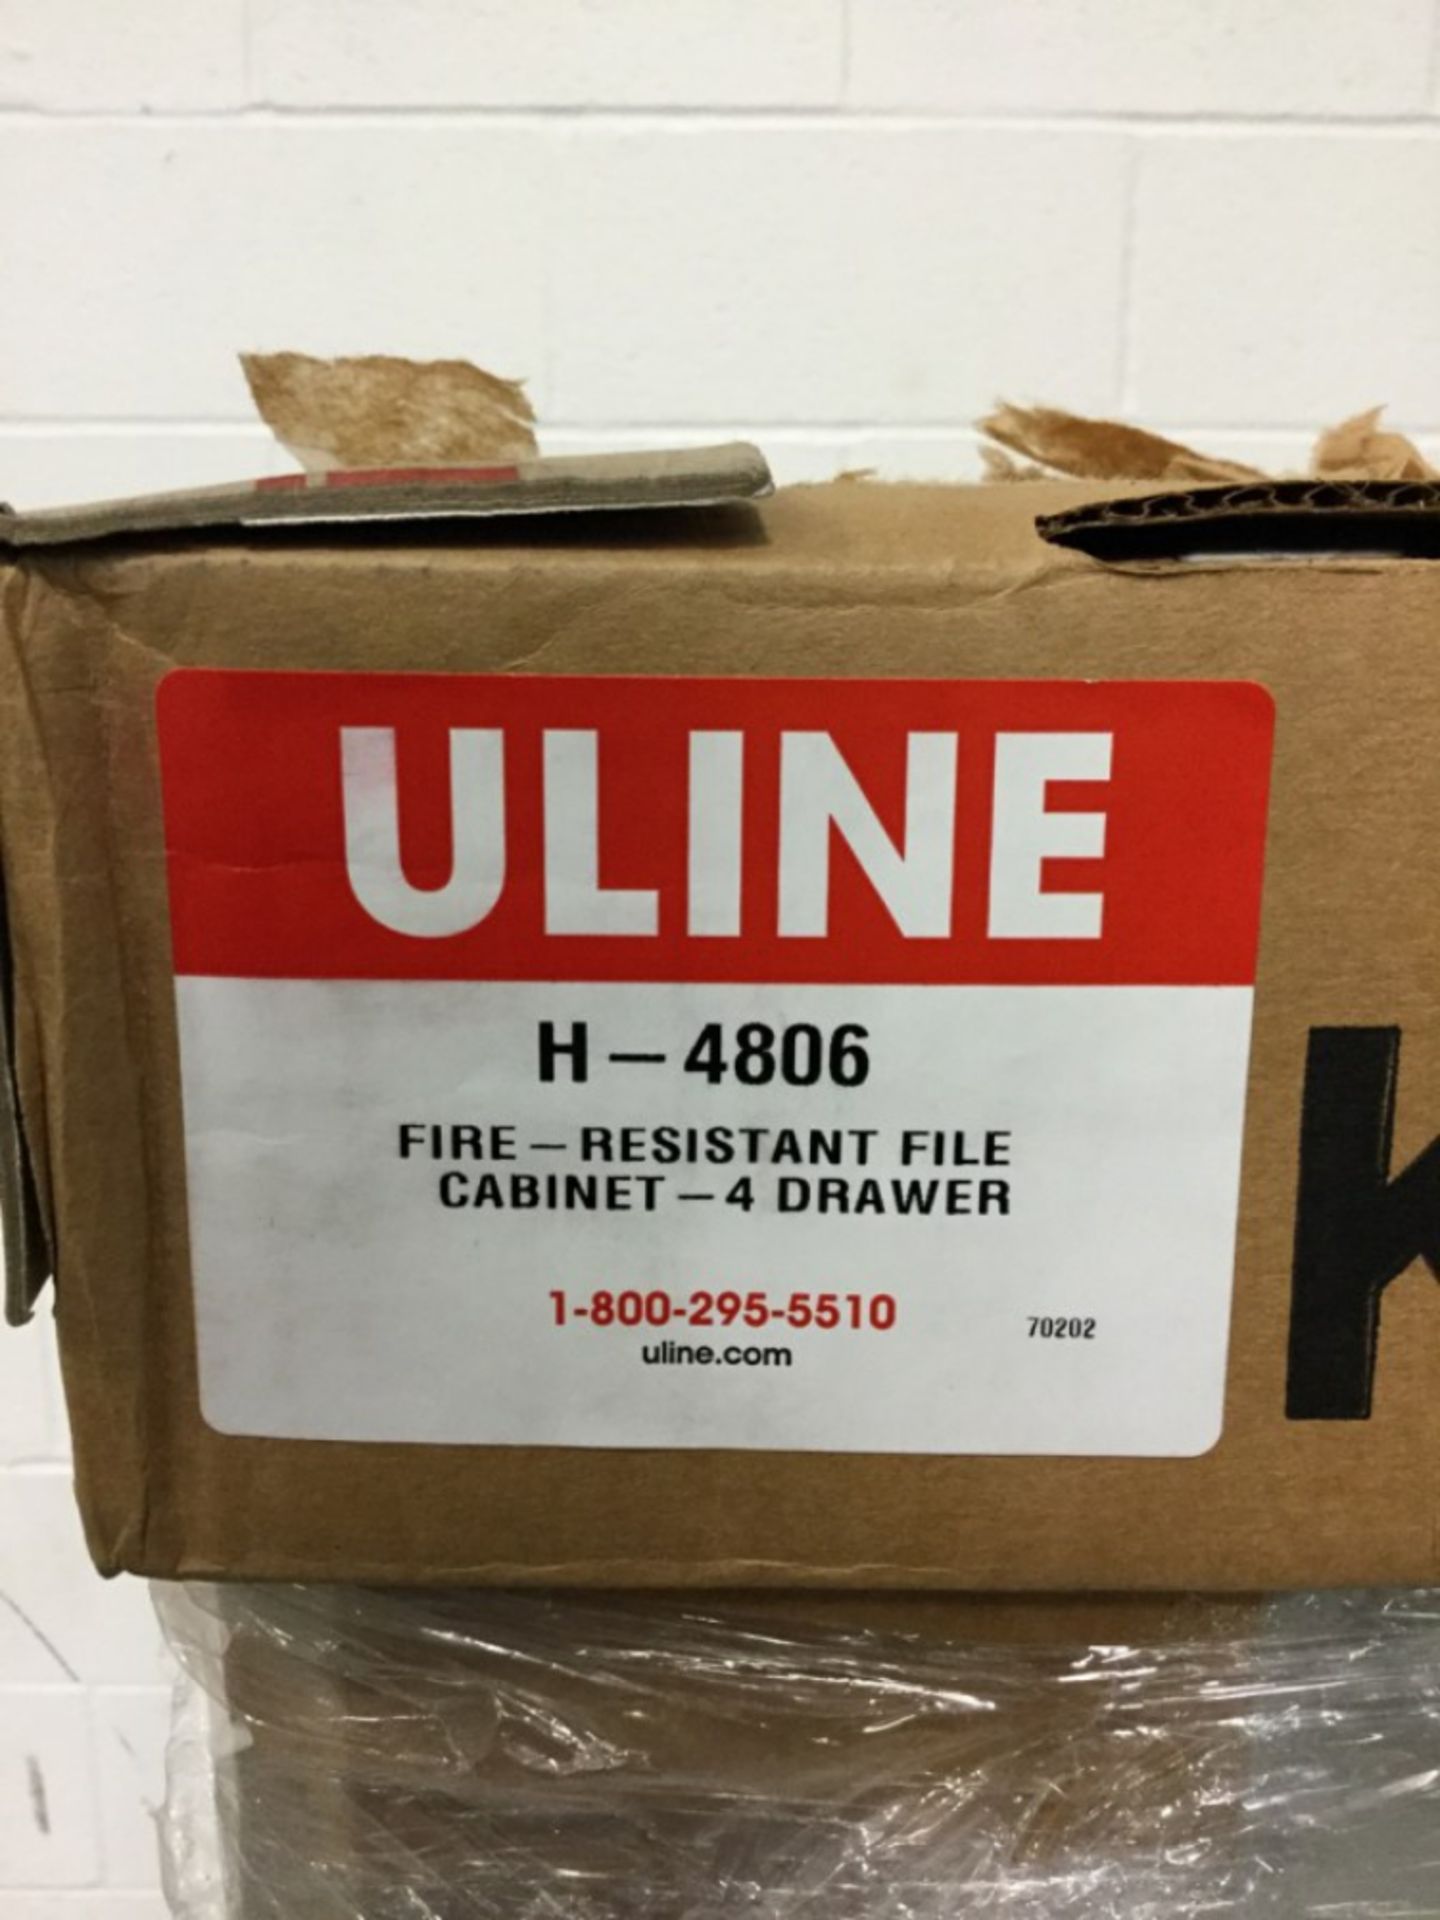 ULINE H-4806 Fire Resistant Filing Cabinet - Image 2 of 2